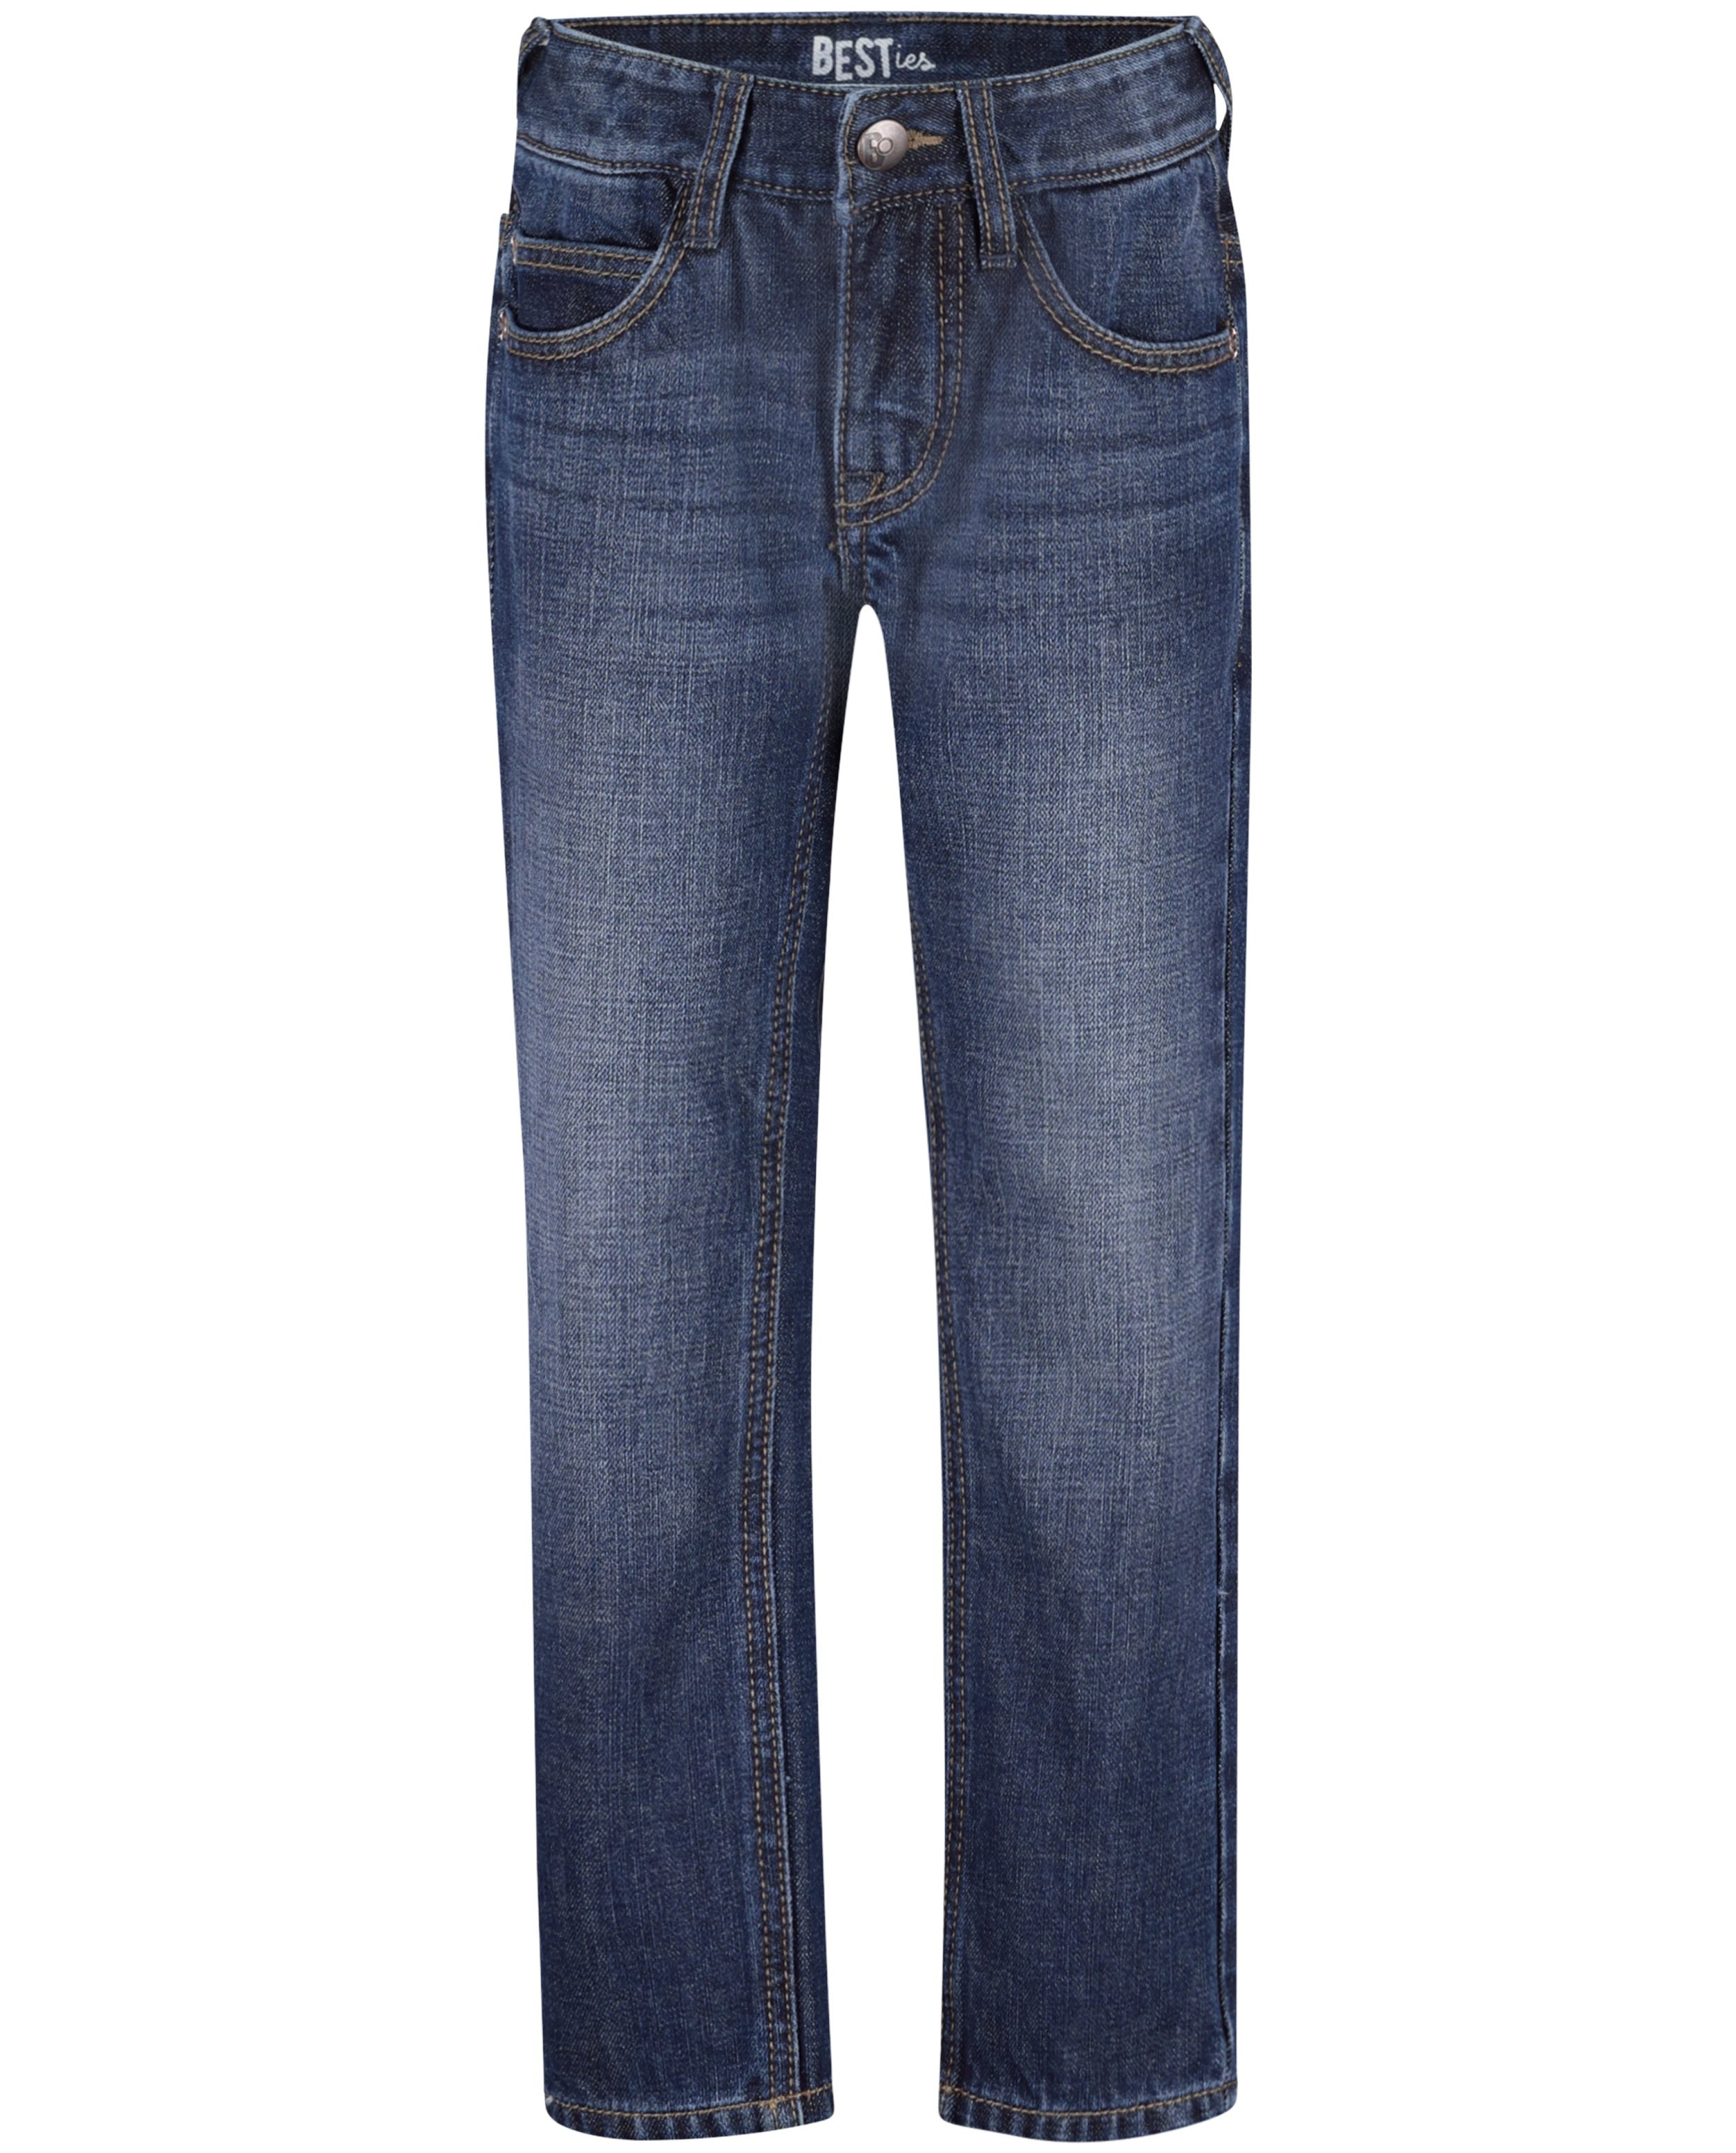 Jeans - Jeans slim SIMON BESTies